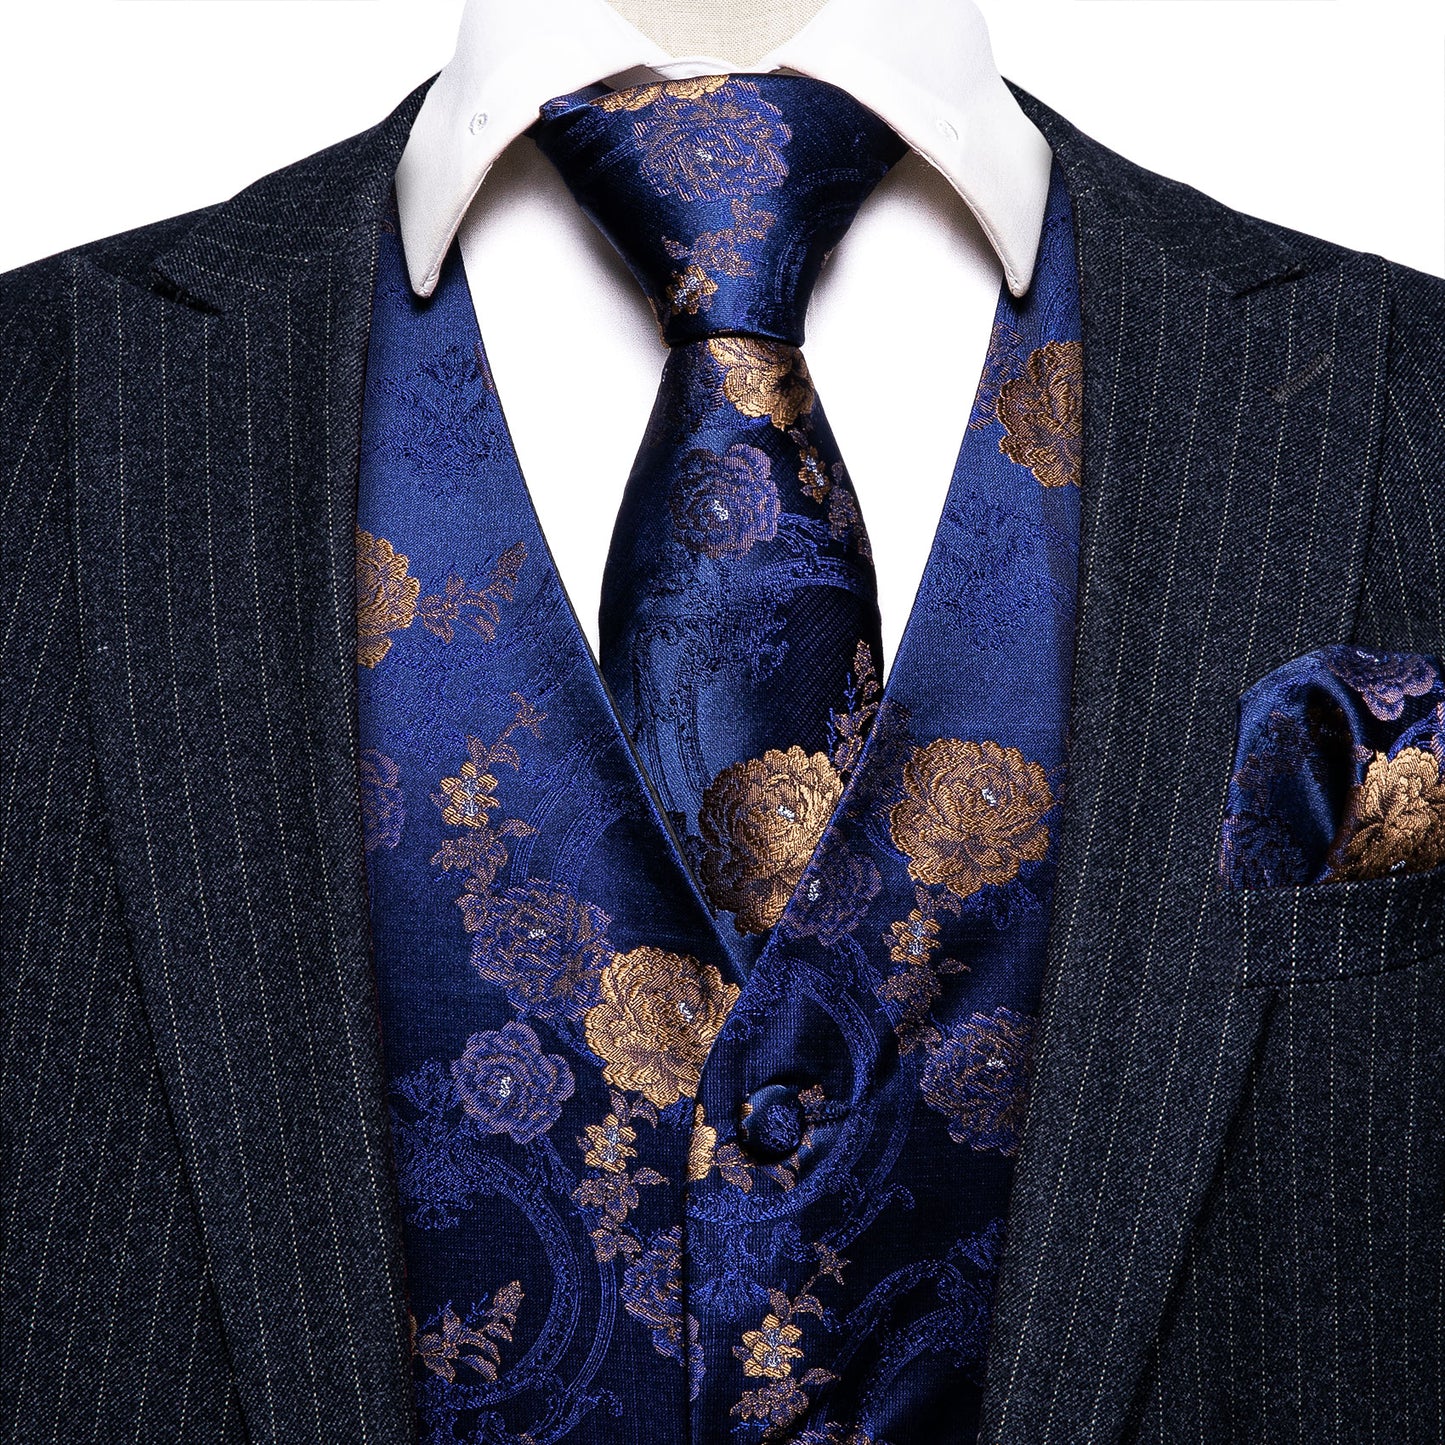 Designer Floral Waistcoat Silky Novelty Vest Paisley Garden Blue